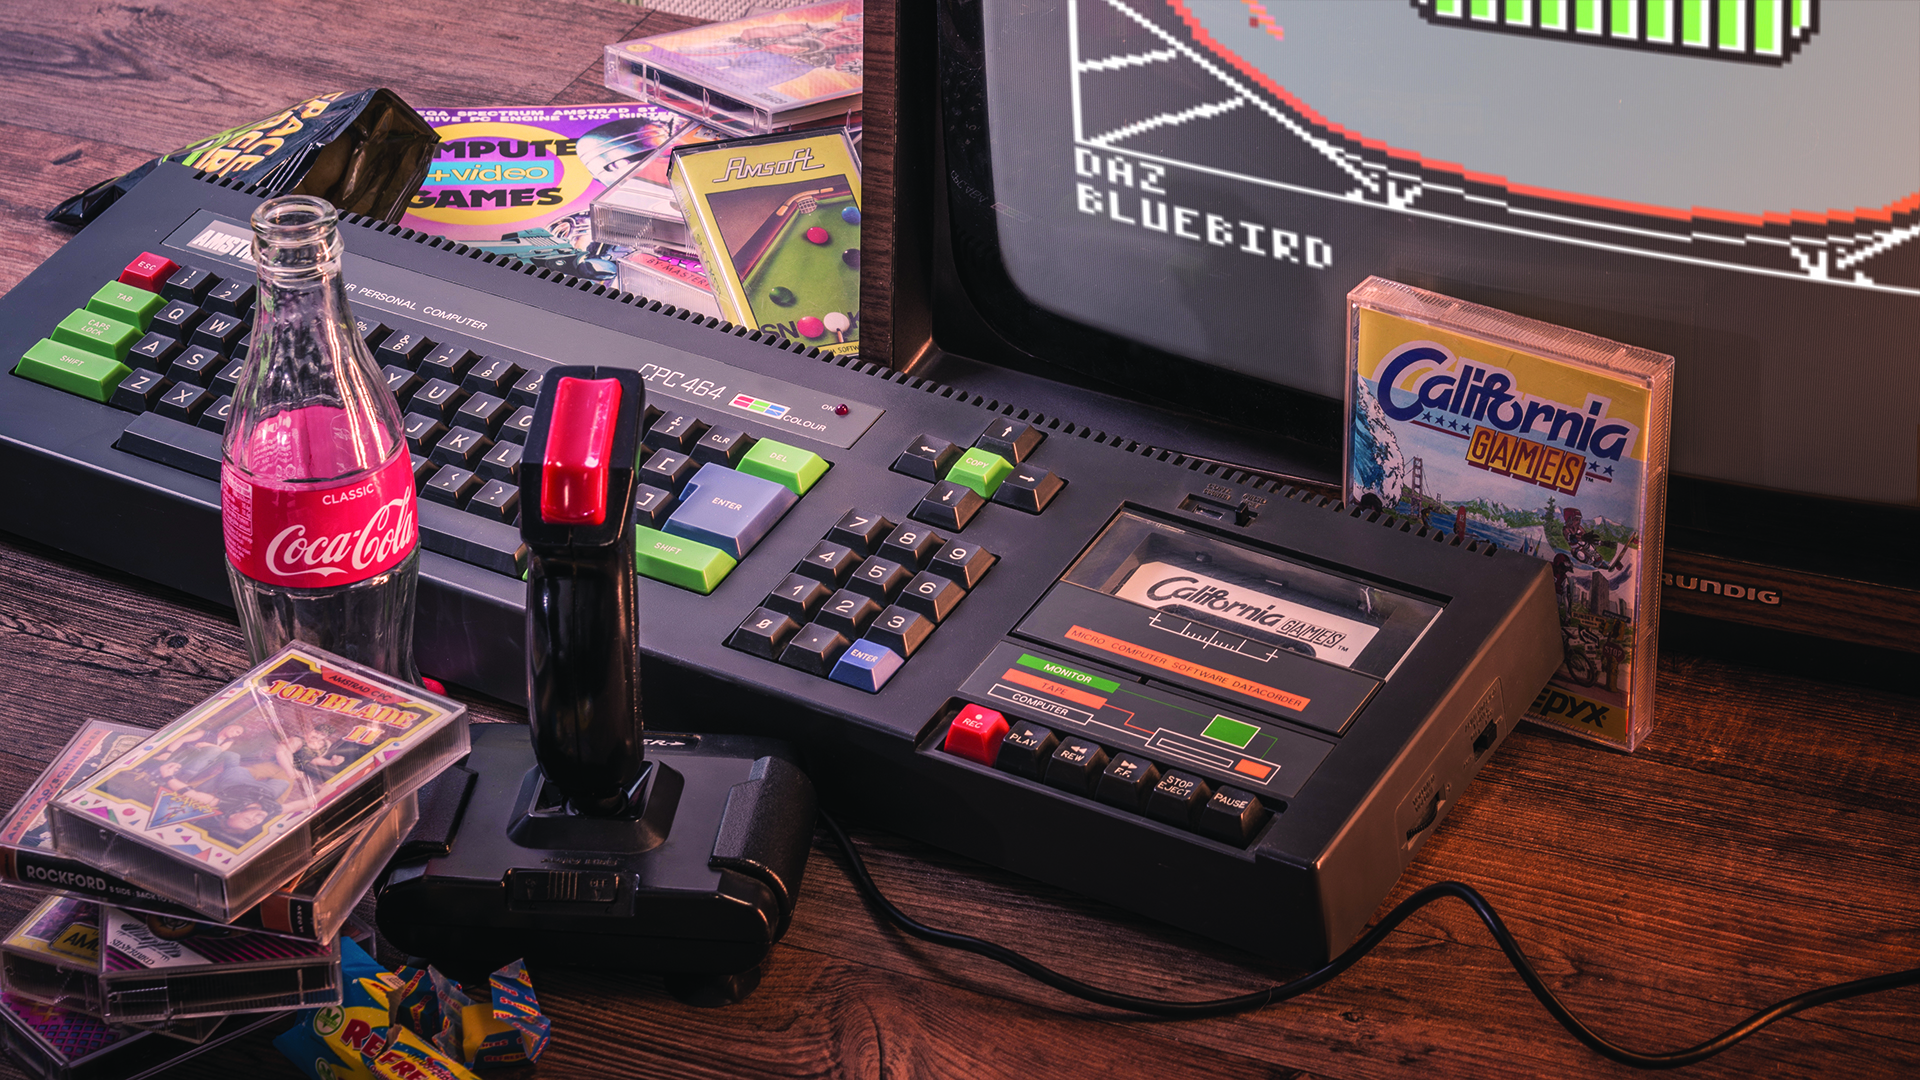 Alan Sugar tells Retro Gamer his plans to create an Amstrad museum